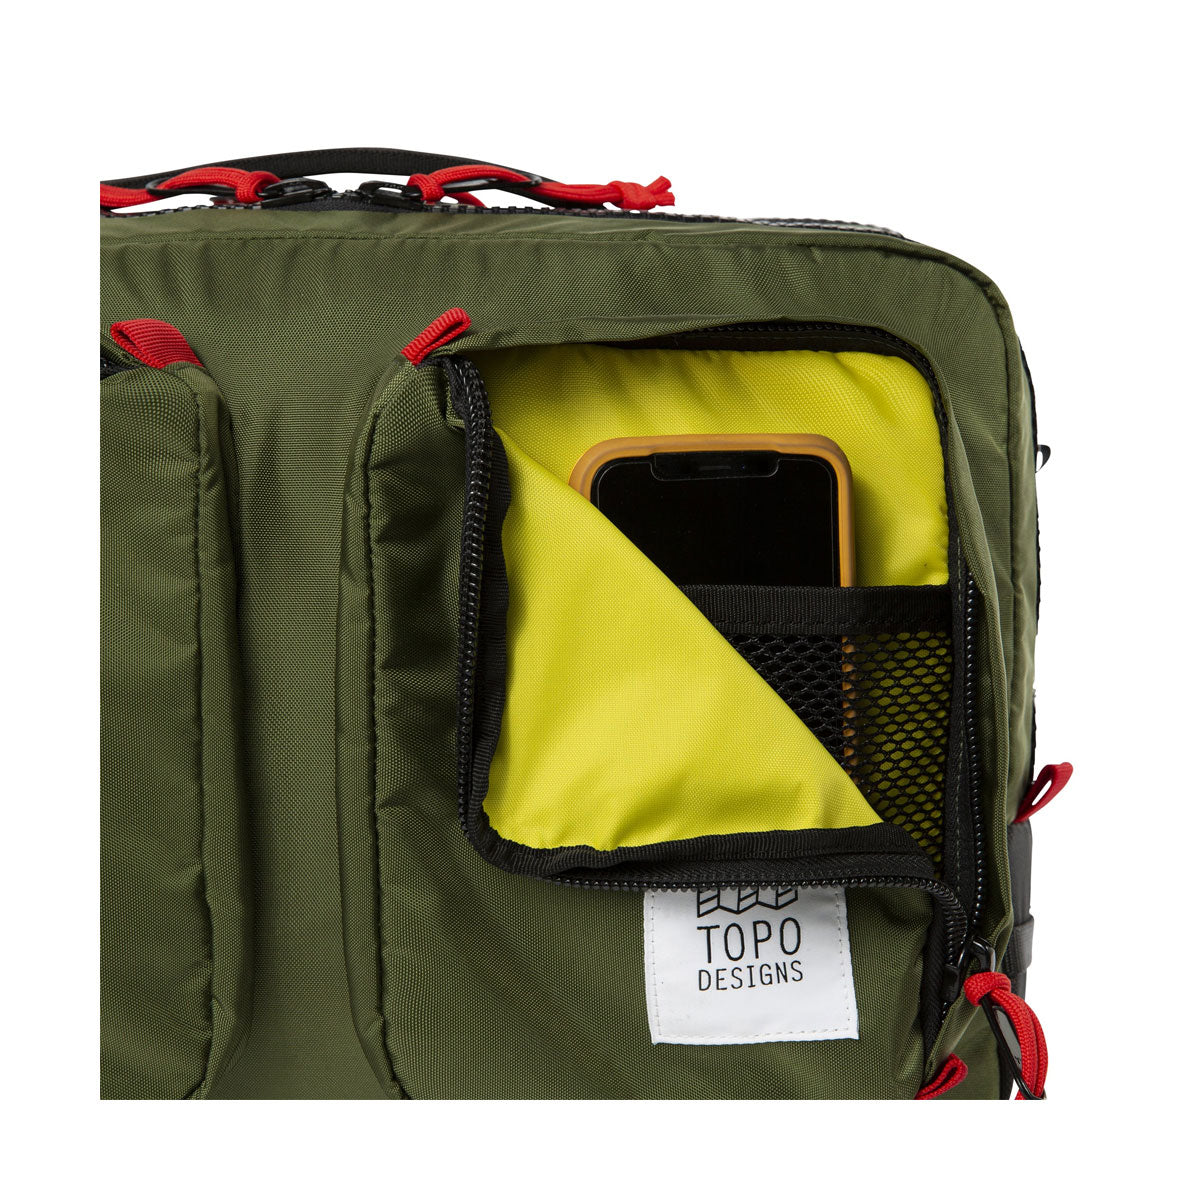 Topo Designs : Global Briefcase : Navy